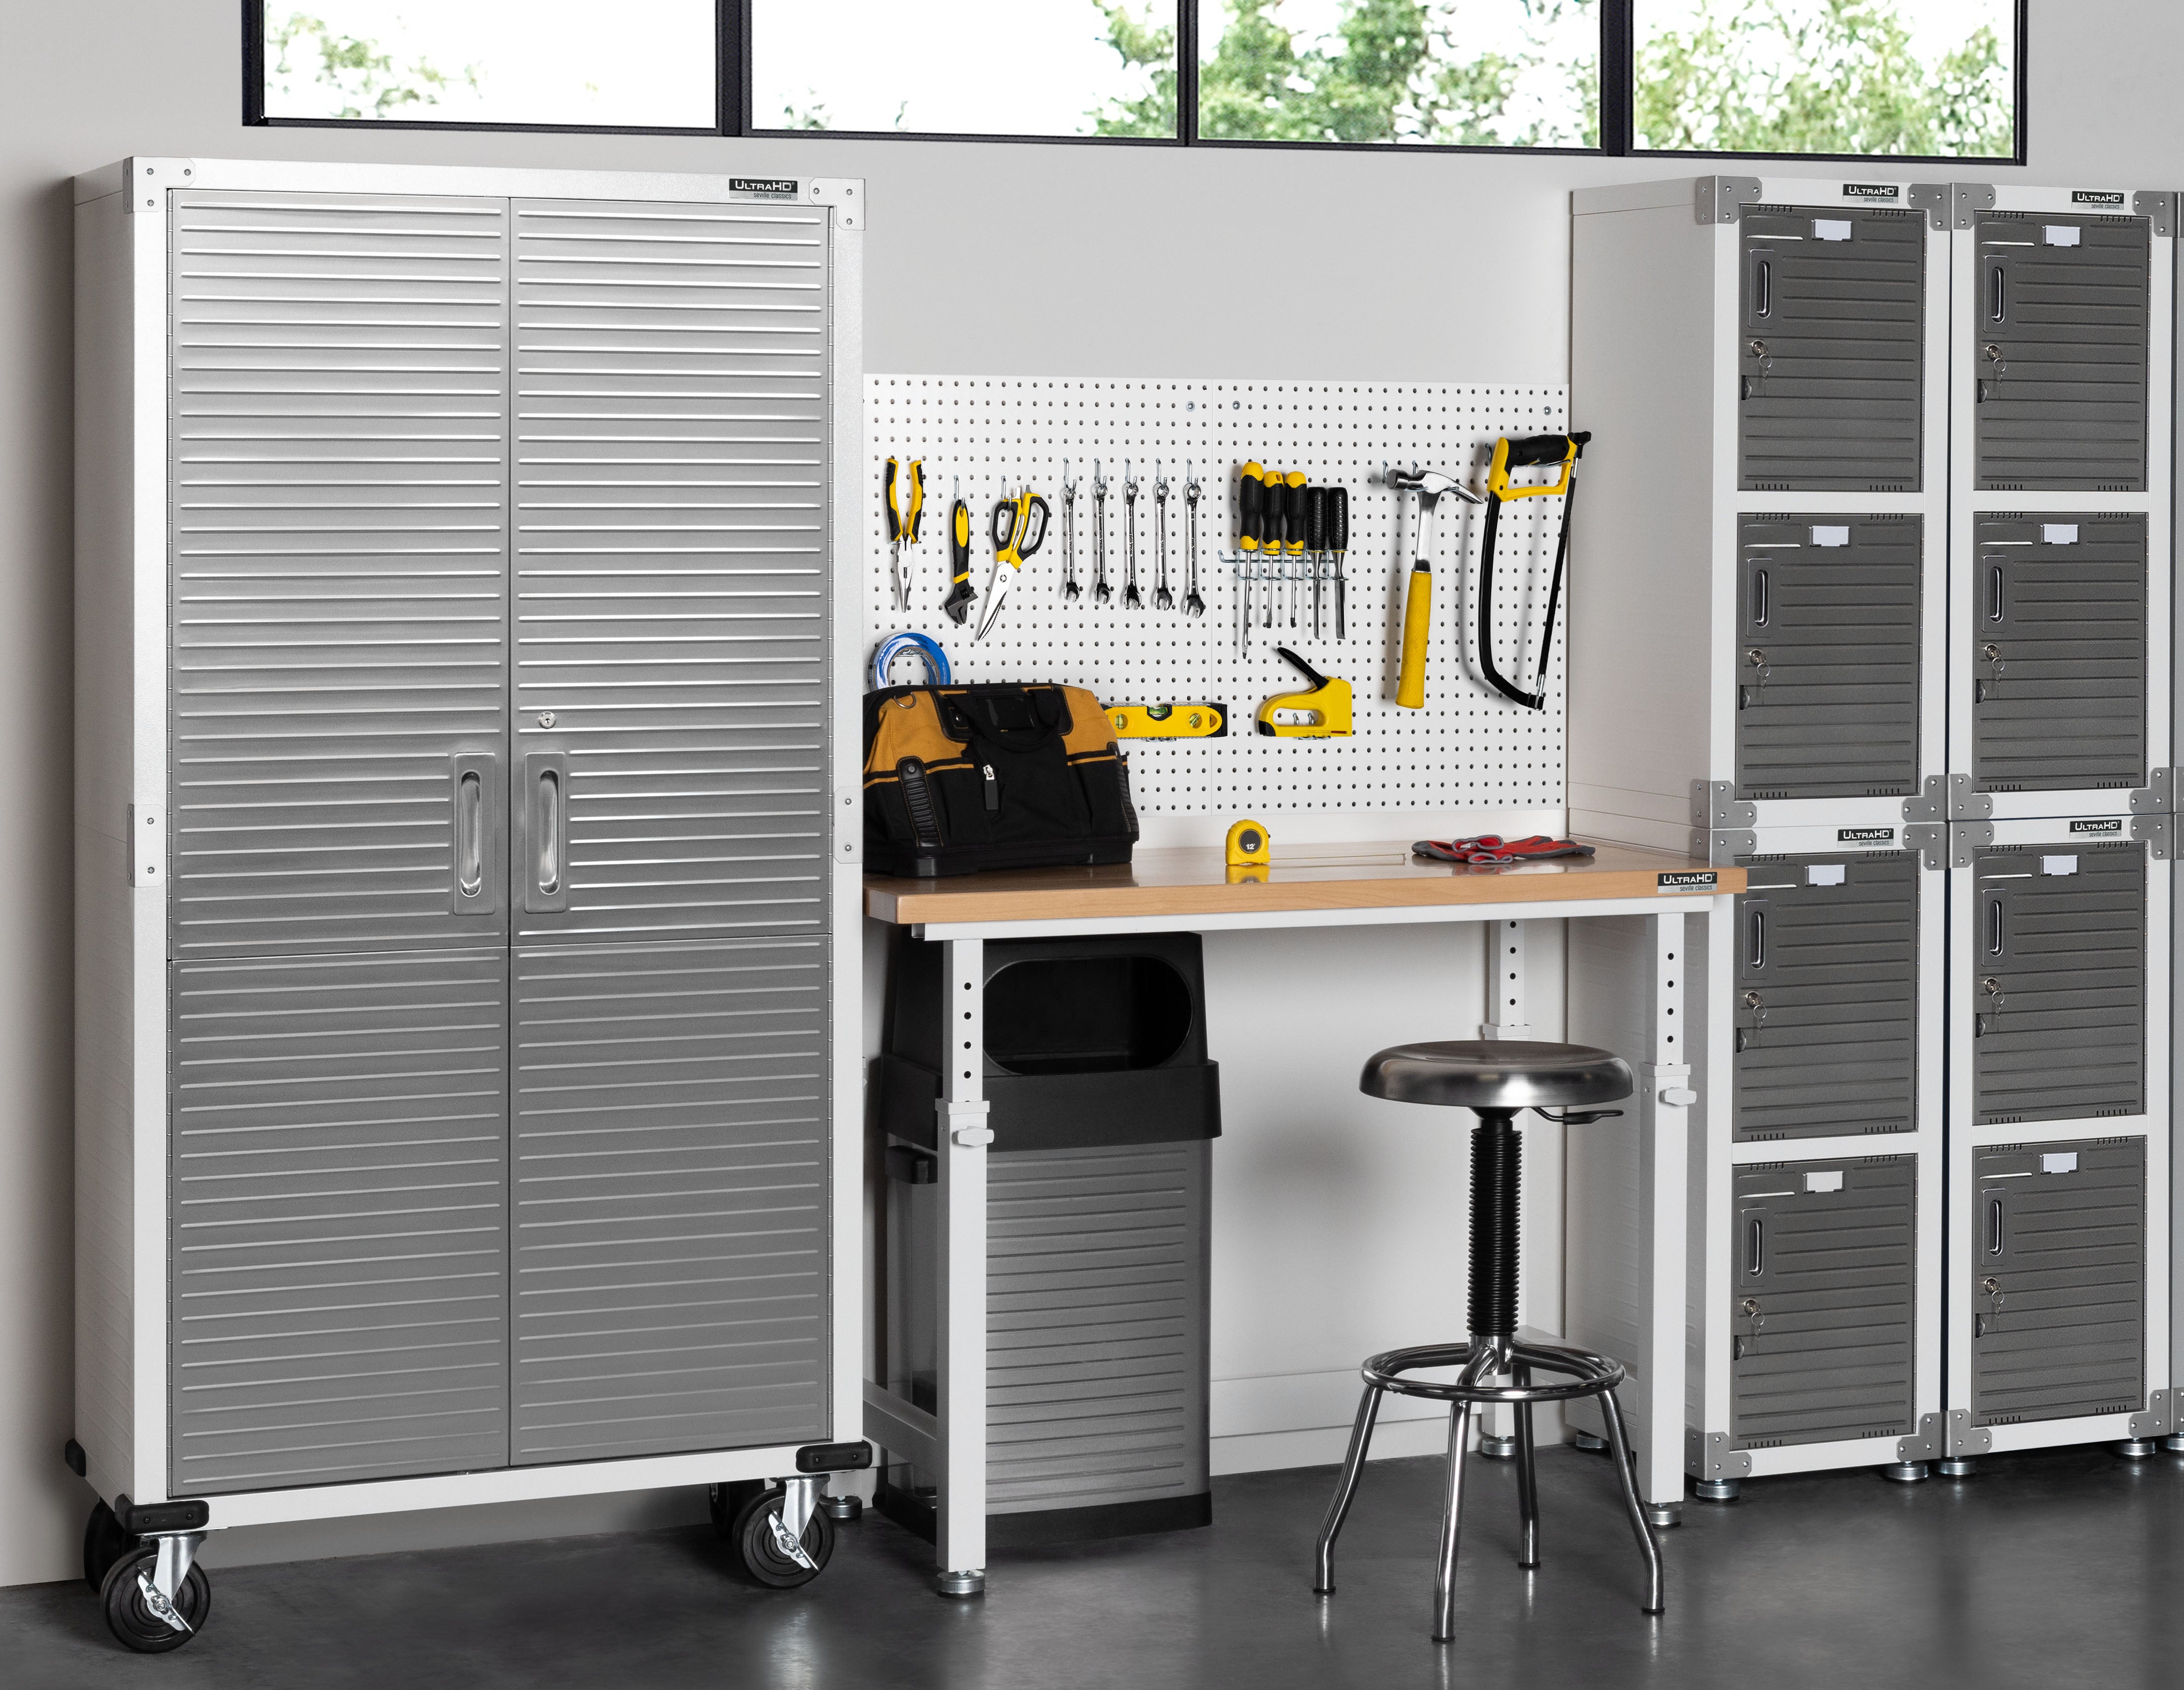 Seville Classics UltraHD 6-Piece Steel Garage Cabinet Storage Set